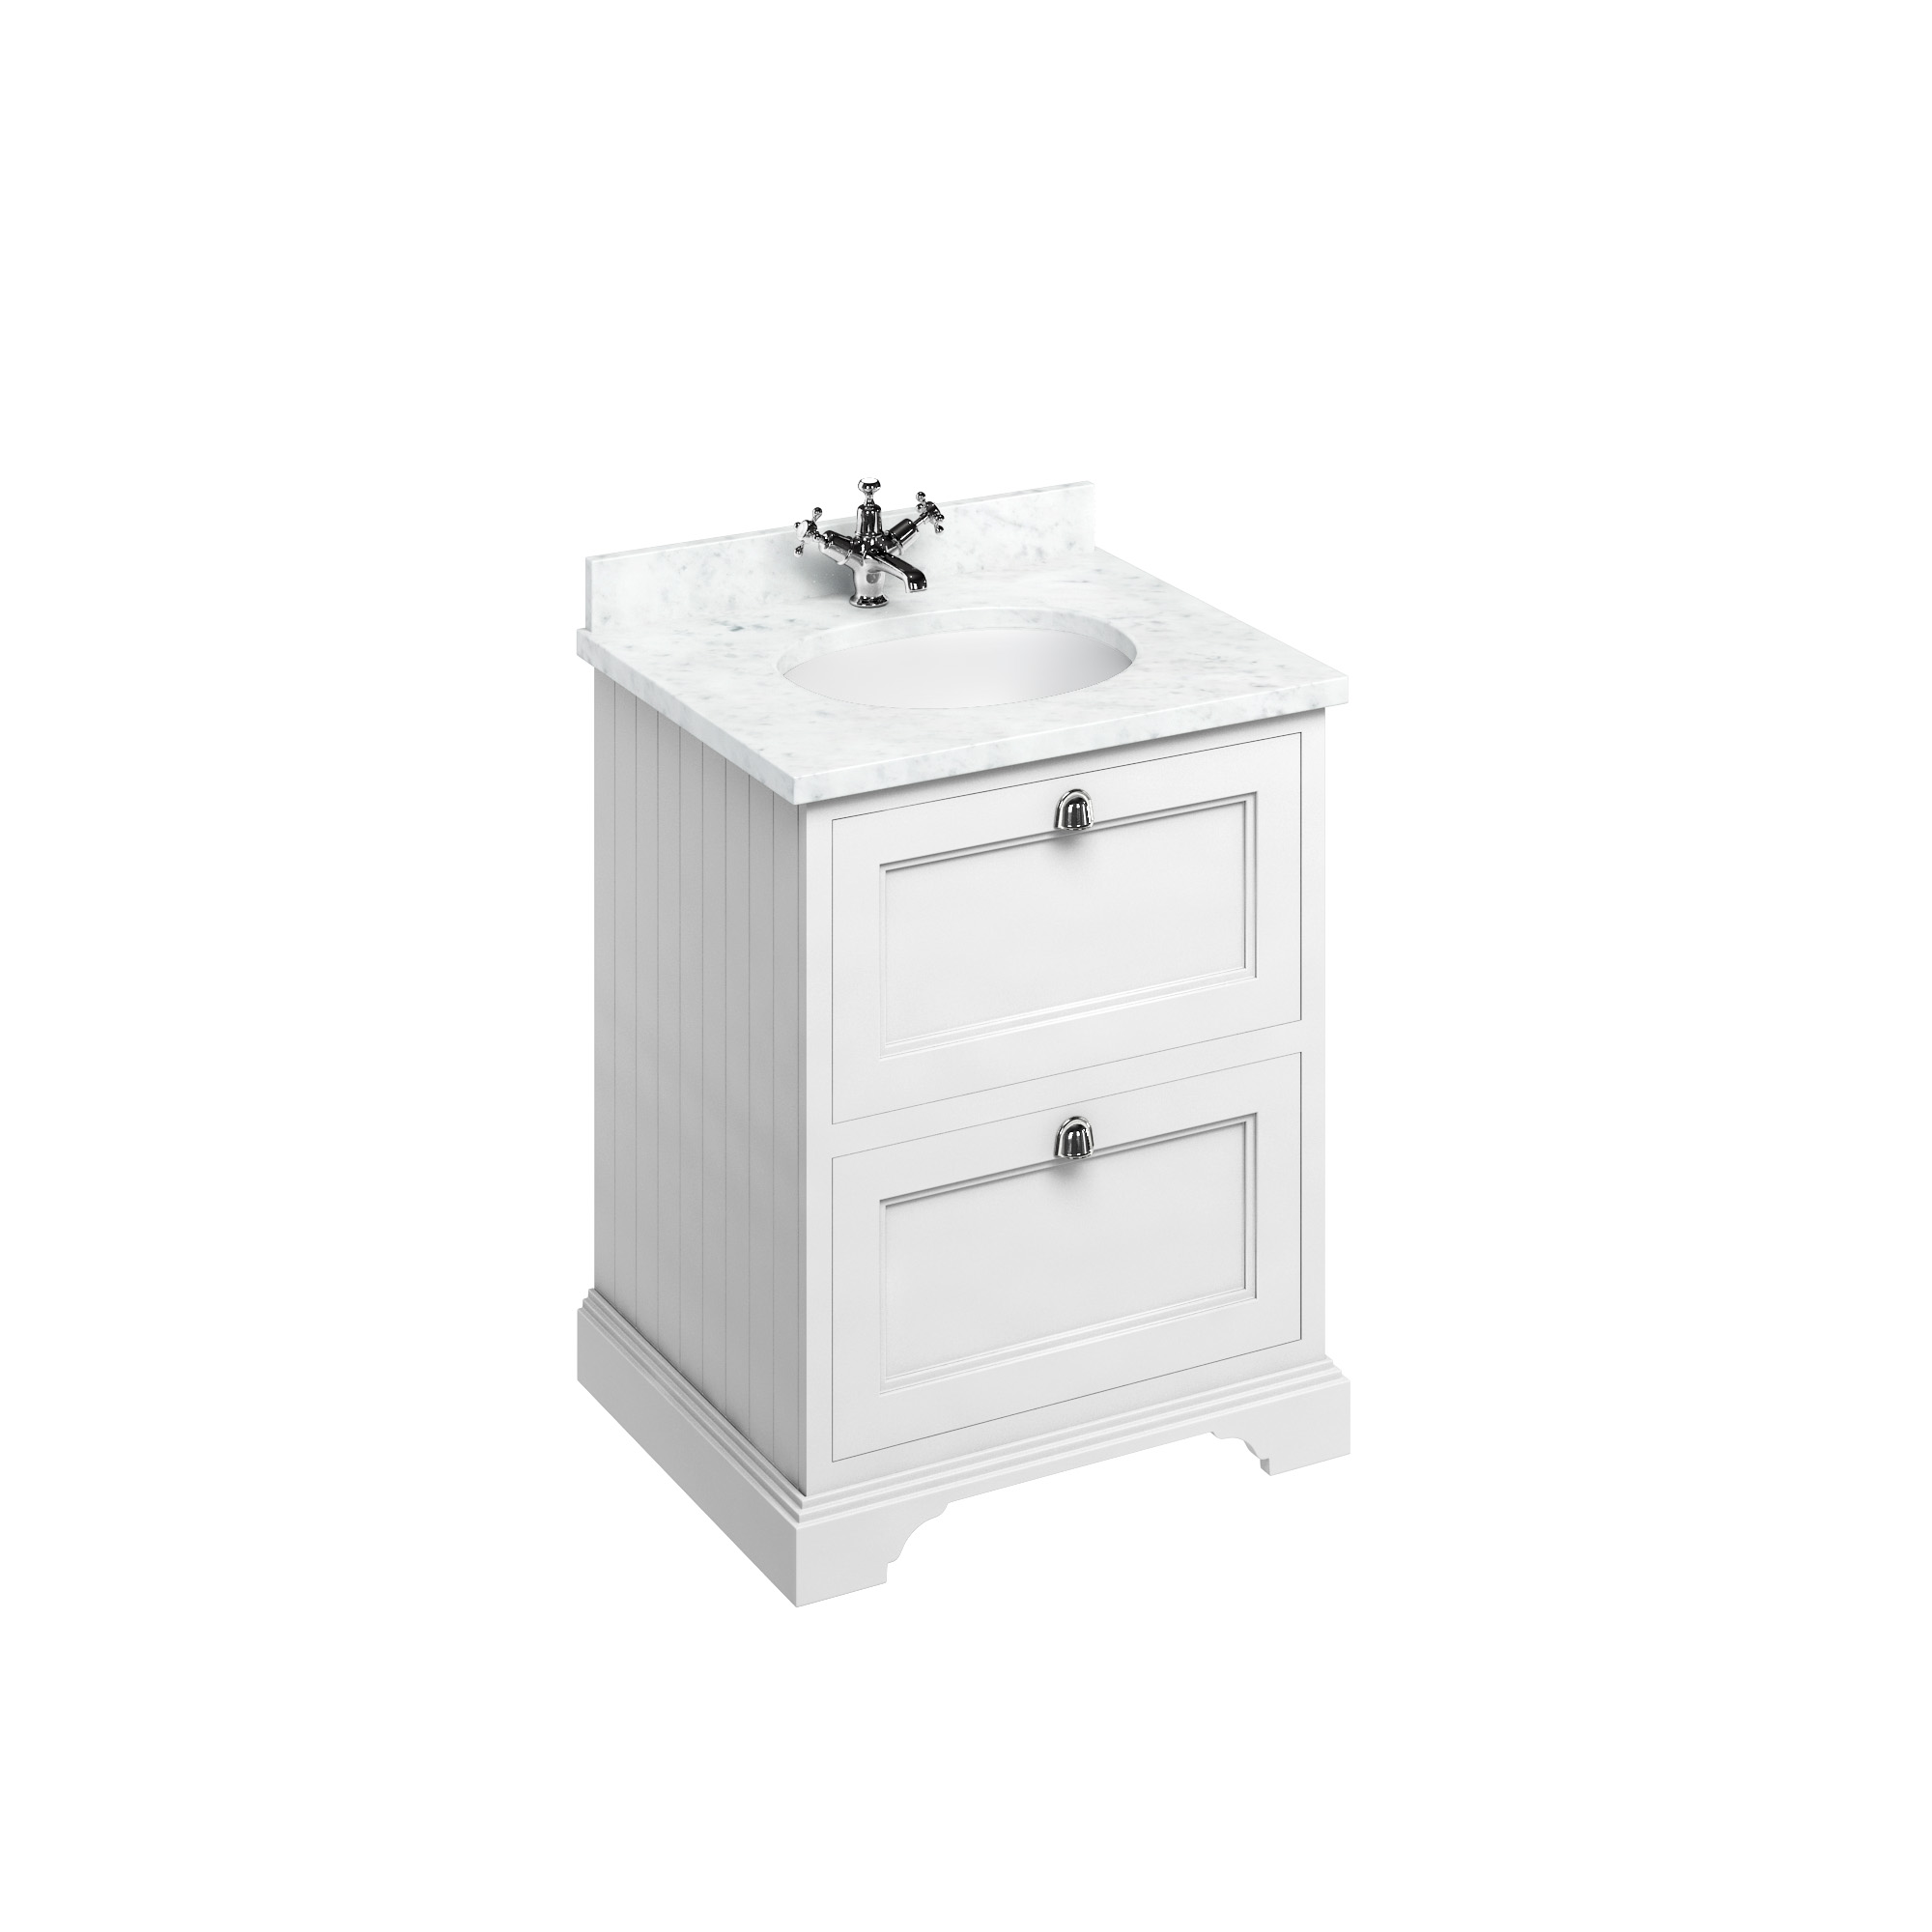 Freestanding 65 Vanity Unit with 2 drawers - Matt White and Minerva Carrara white worktop with integrated white basin